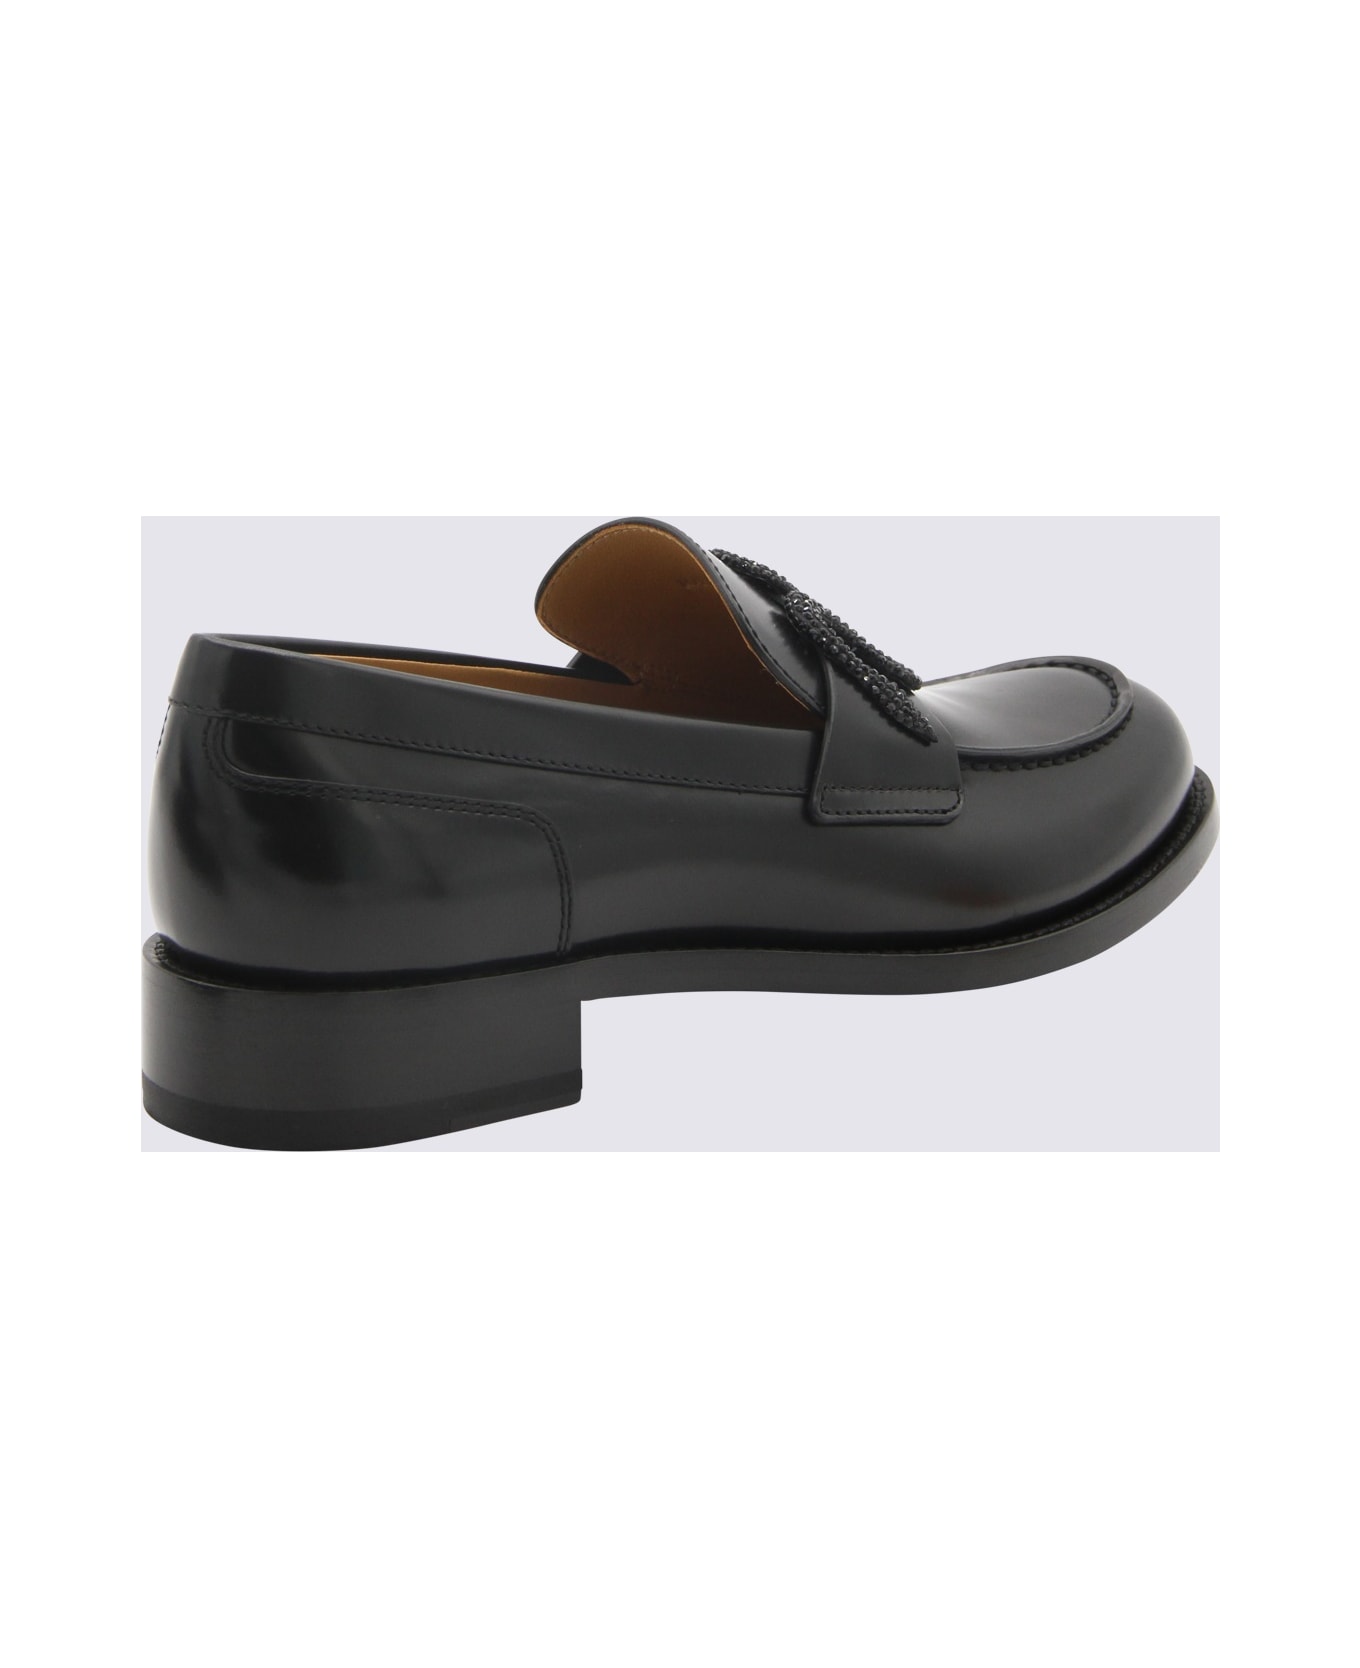 René Caovilla Black Leather Loafers - BLACK CALF/JET STRASS フラットシューズ